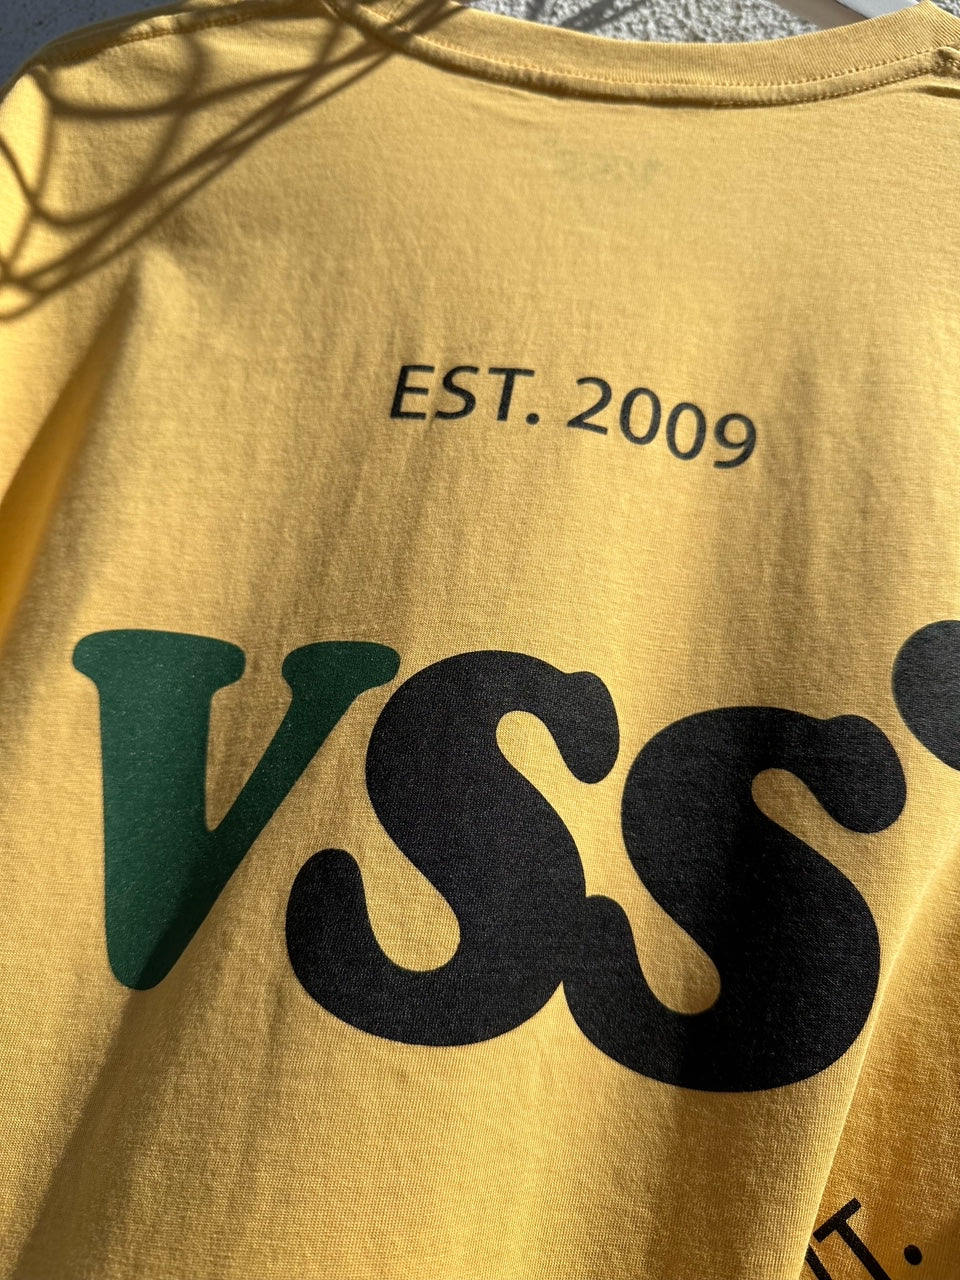 VSS: A Soccer & Lifestyle Joint. T-Shirt - Mustard